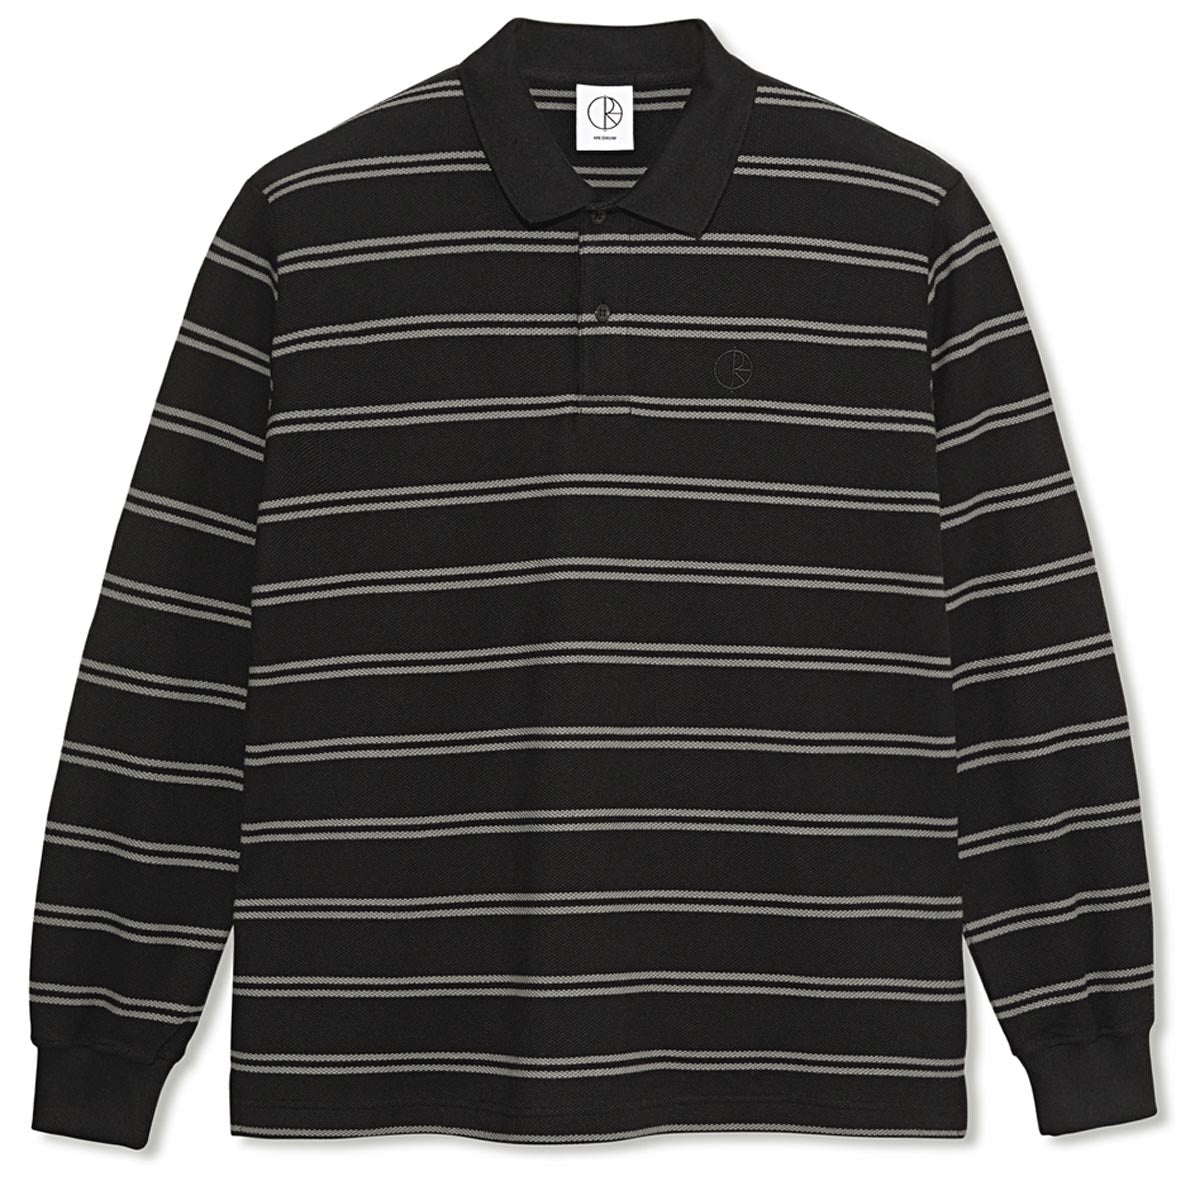 Polar Polo Stripe Long Sleeve Shirt - Black image 1